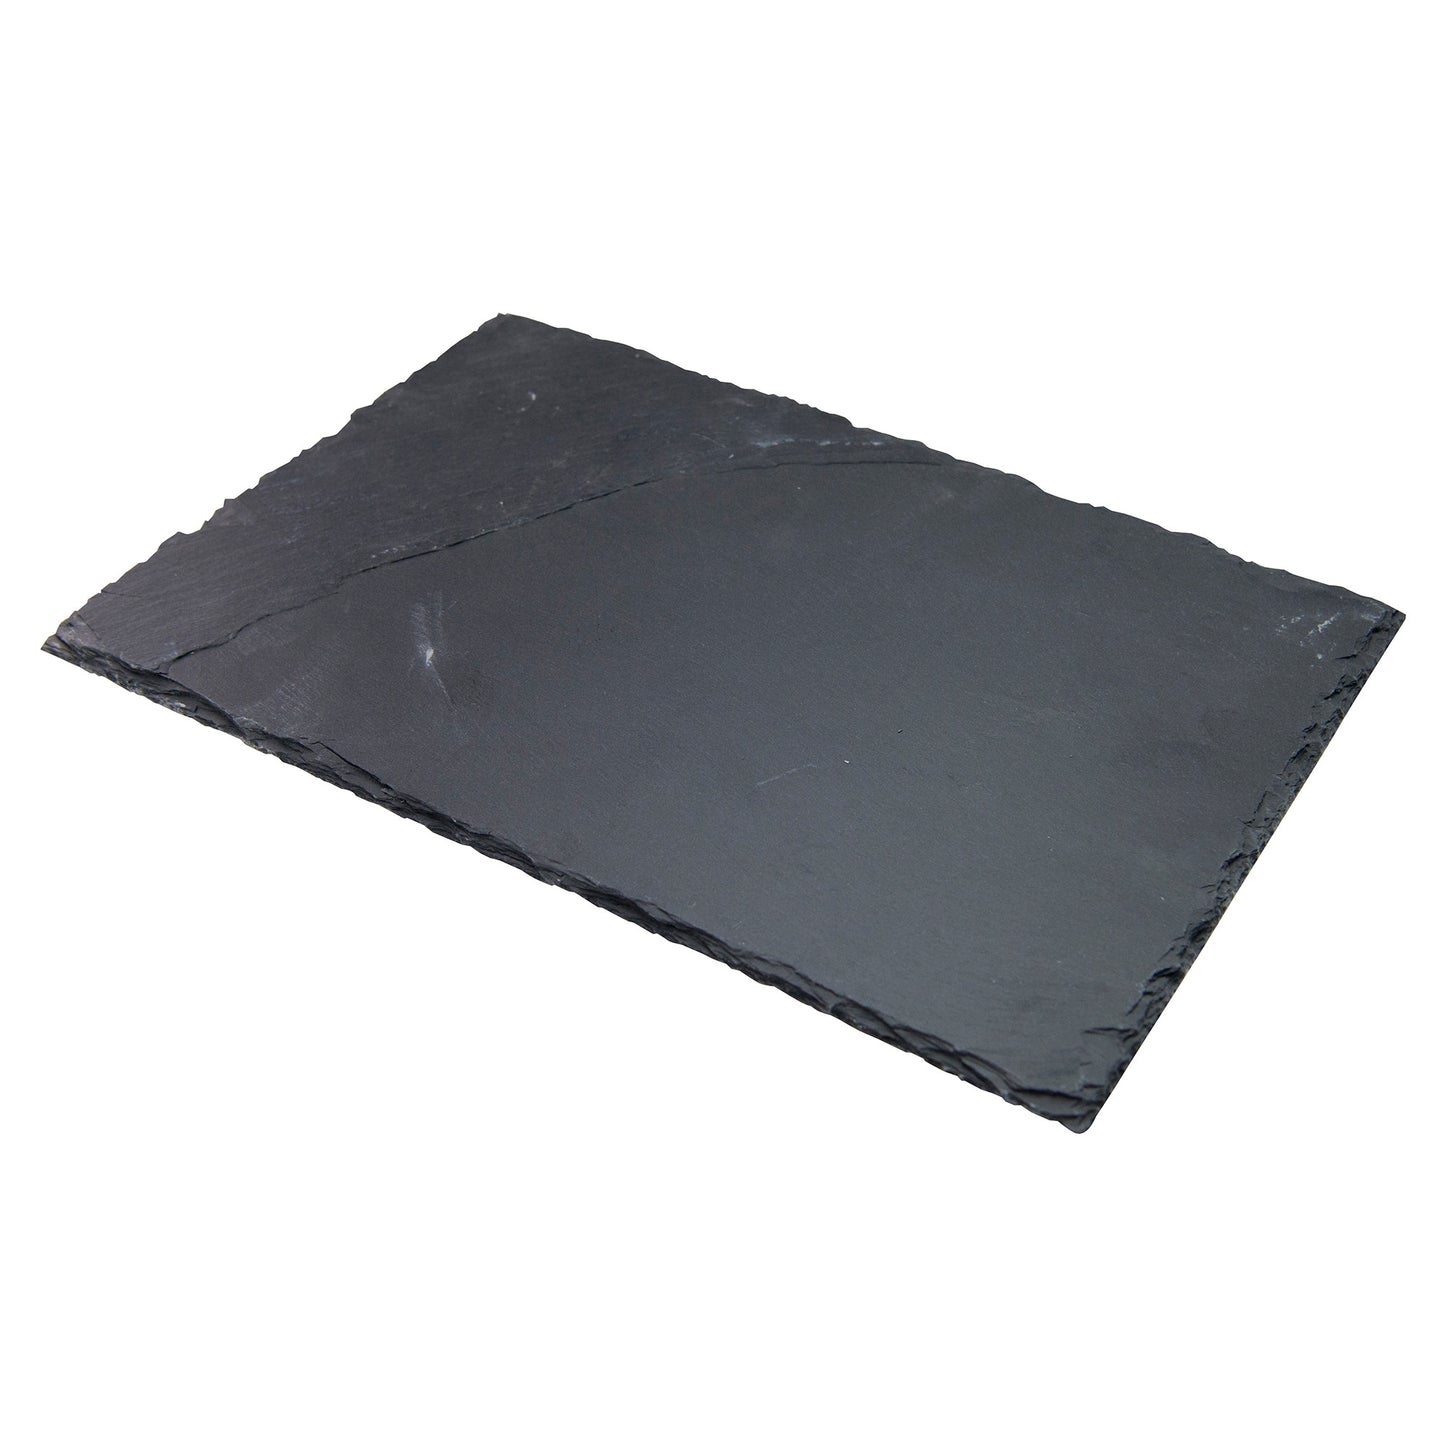 WDL001-302 - Tavo Slate Rectangular Platter - 11-1/2" x 7-7/8"